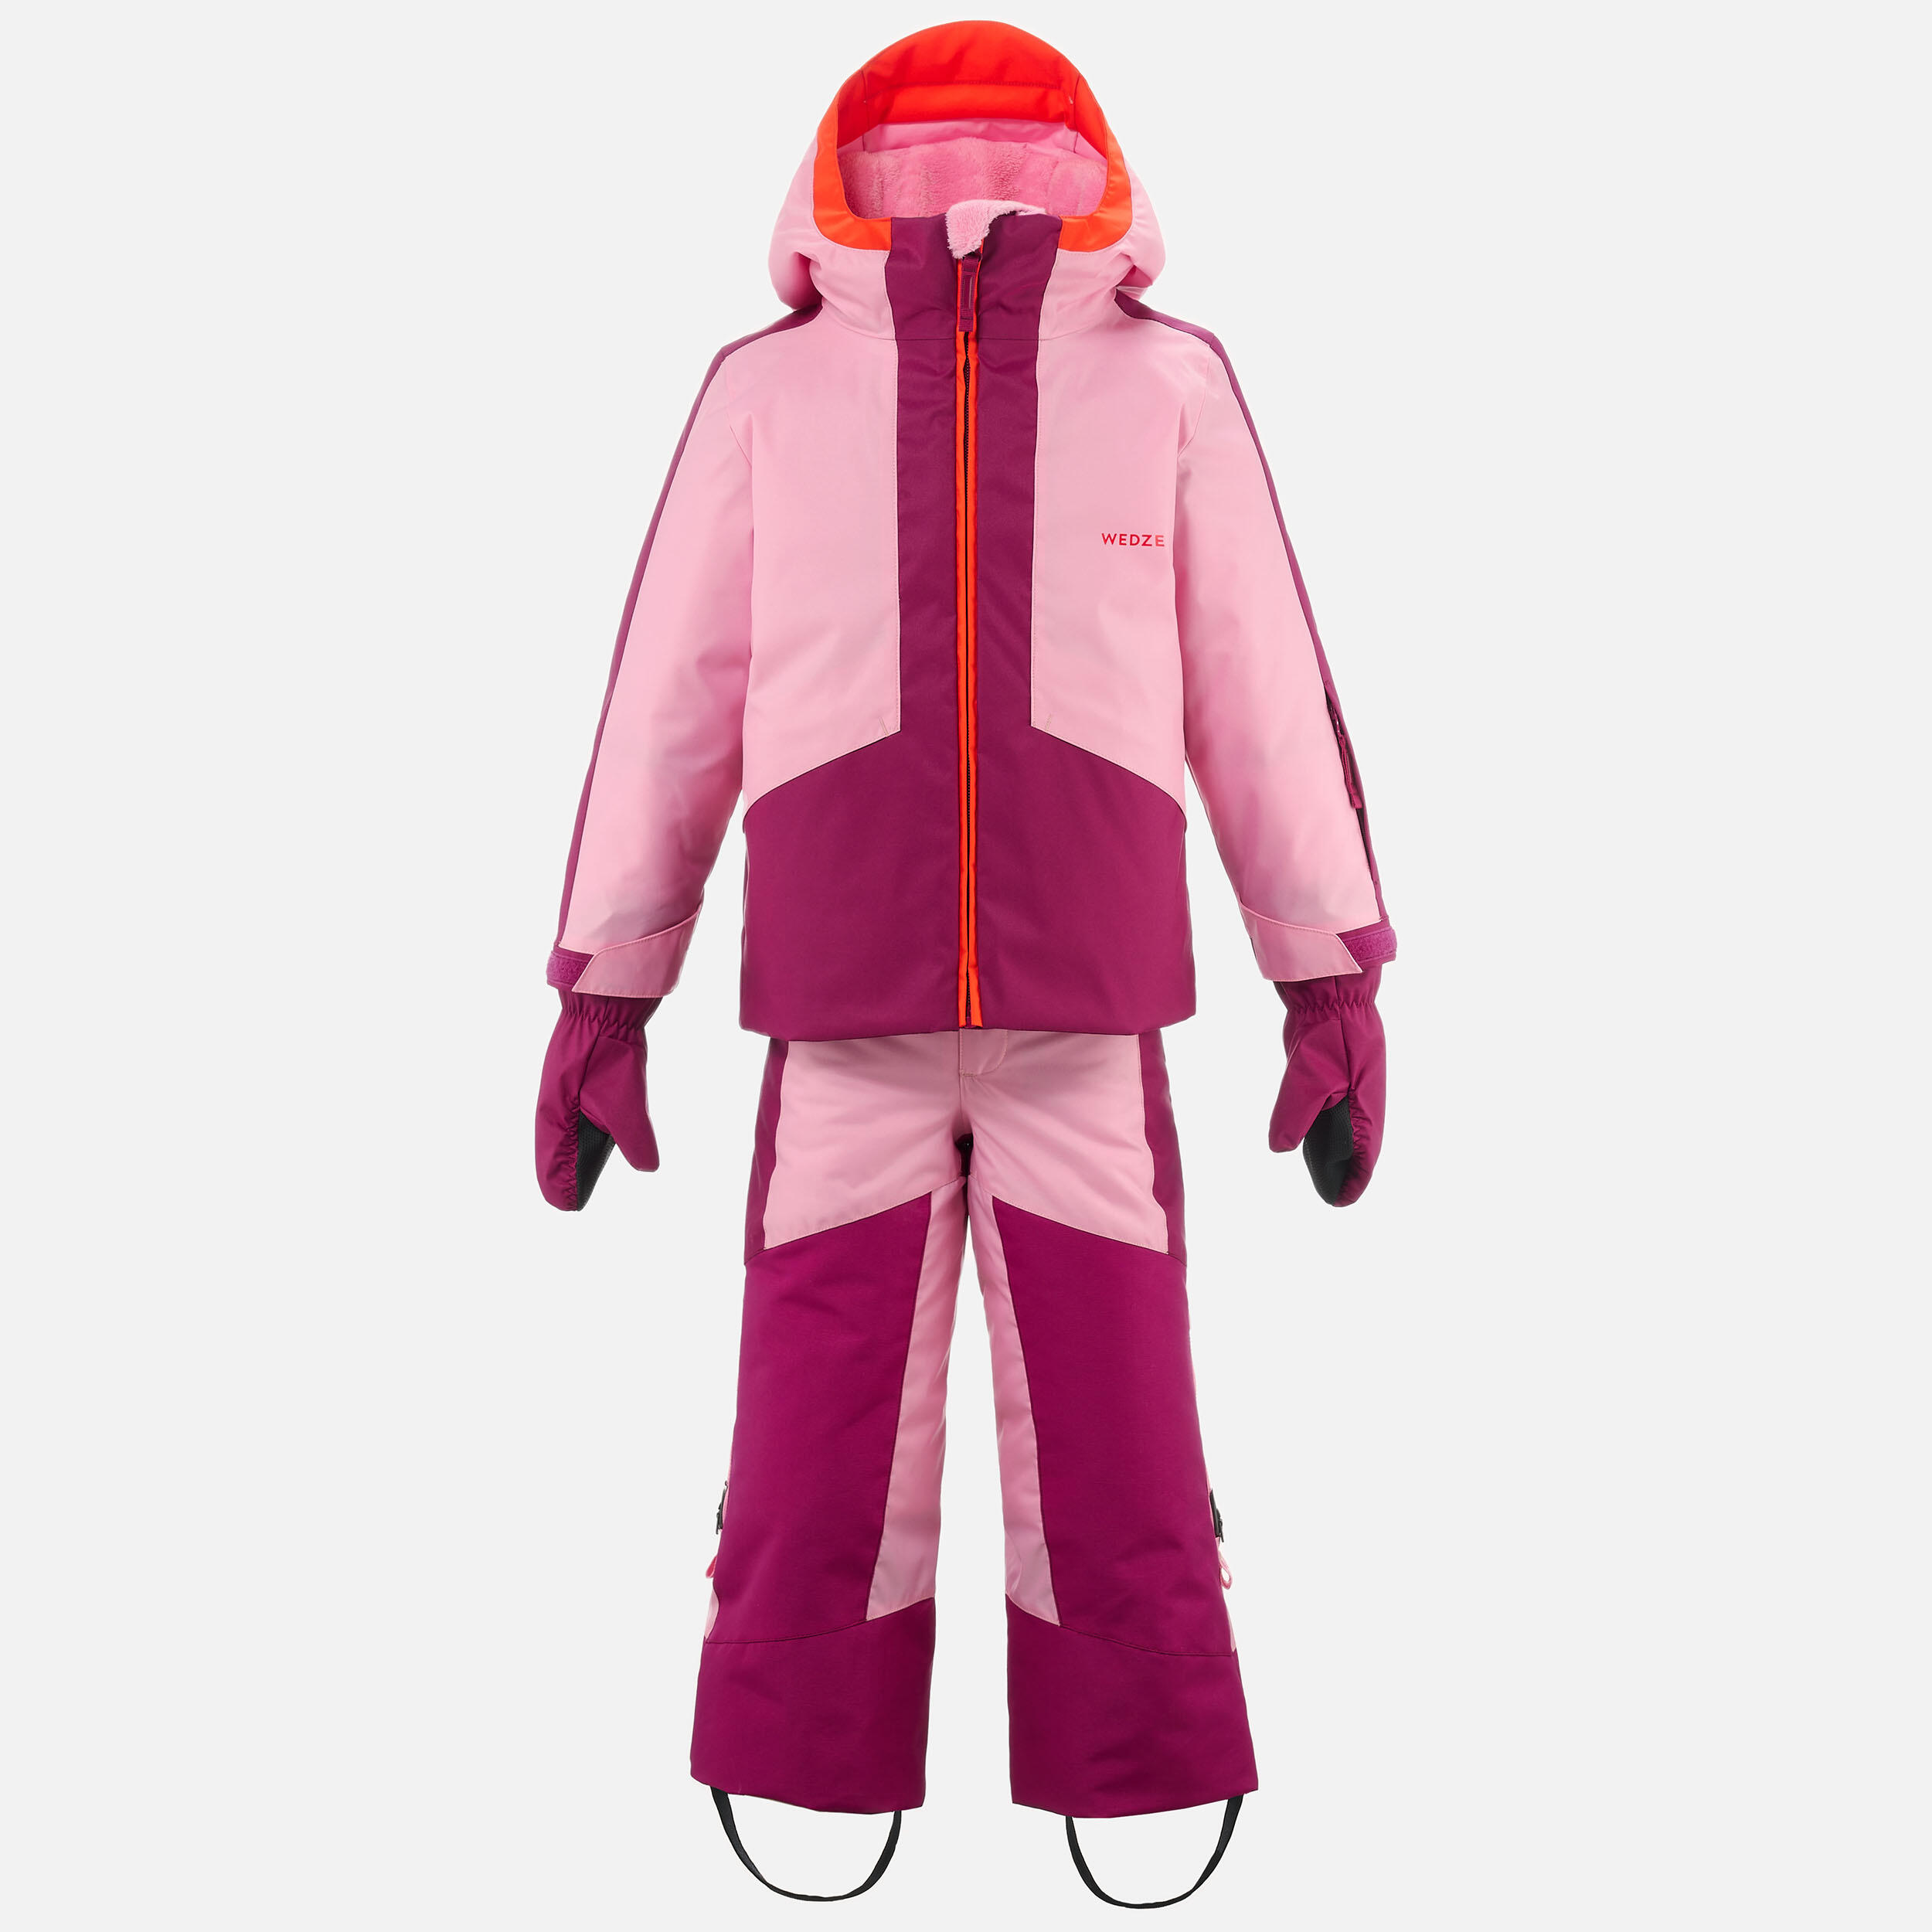 Kids’ Warm and Waterproof Ski Suit 580 - Pink 4/15